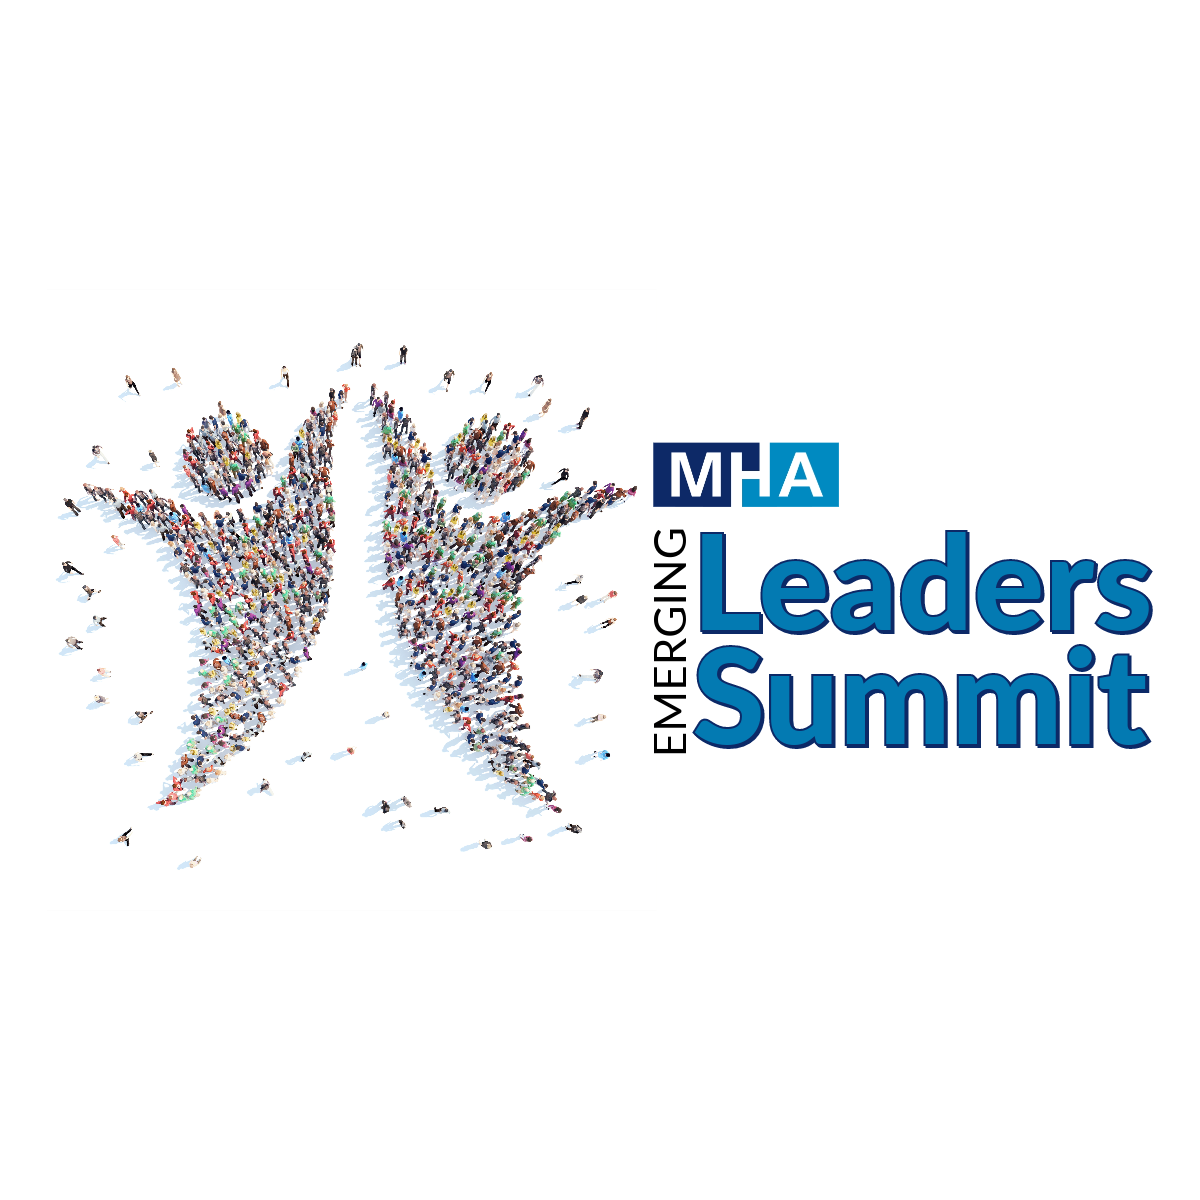 A logo for MHA's Emergin Leaders Summit